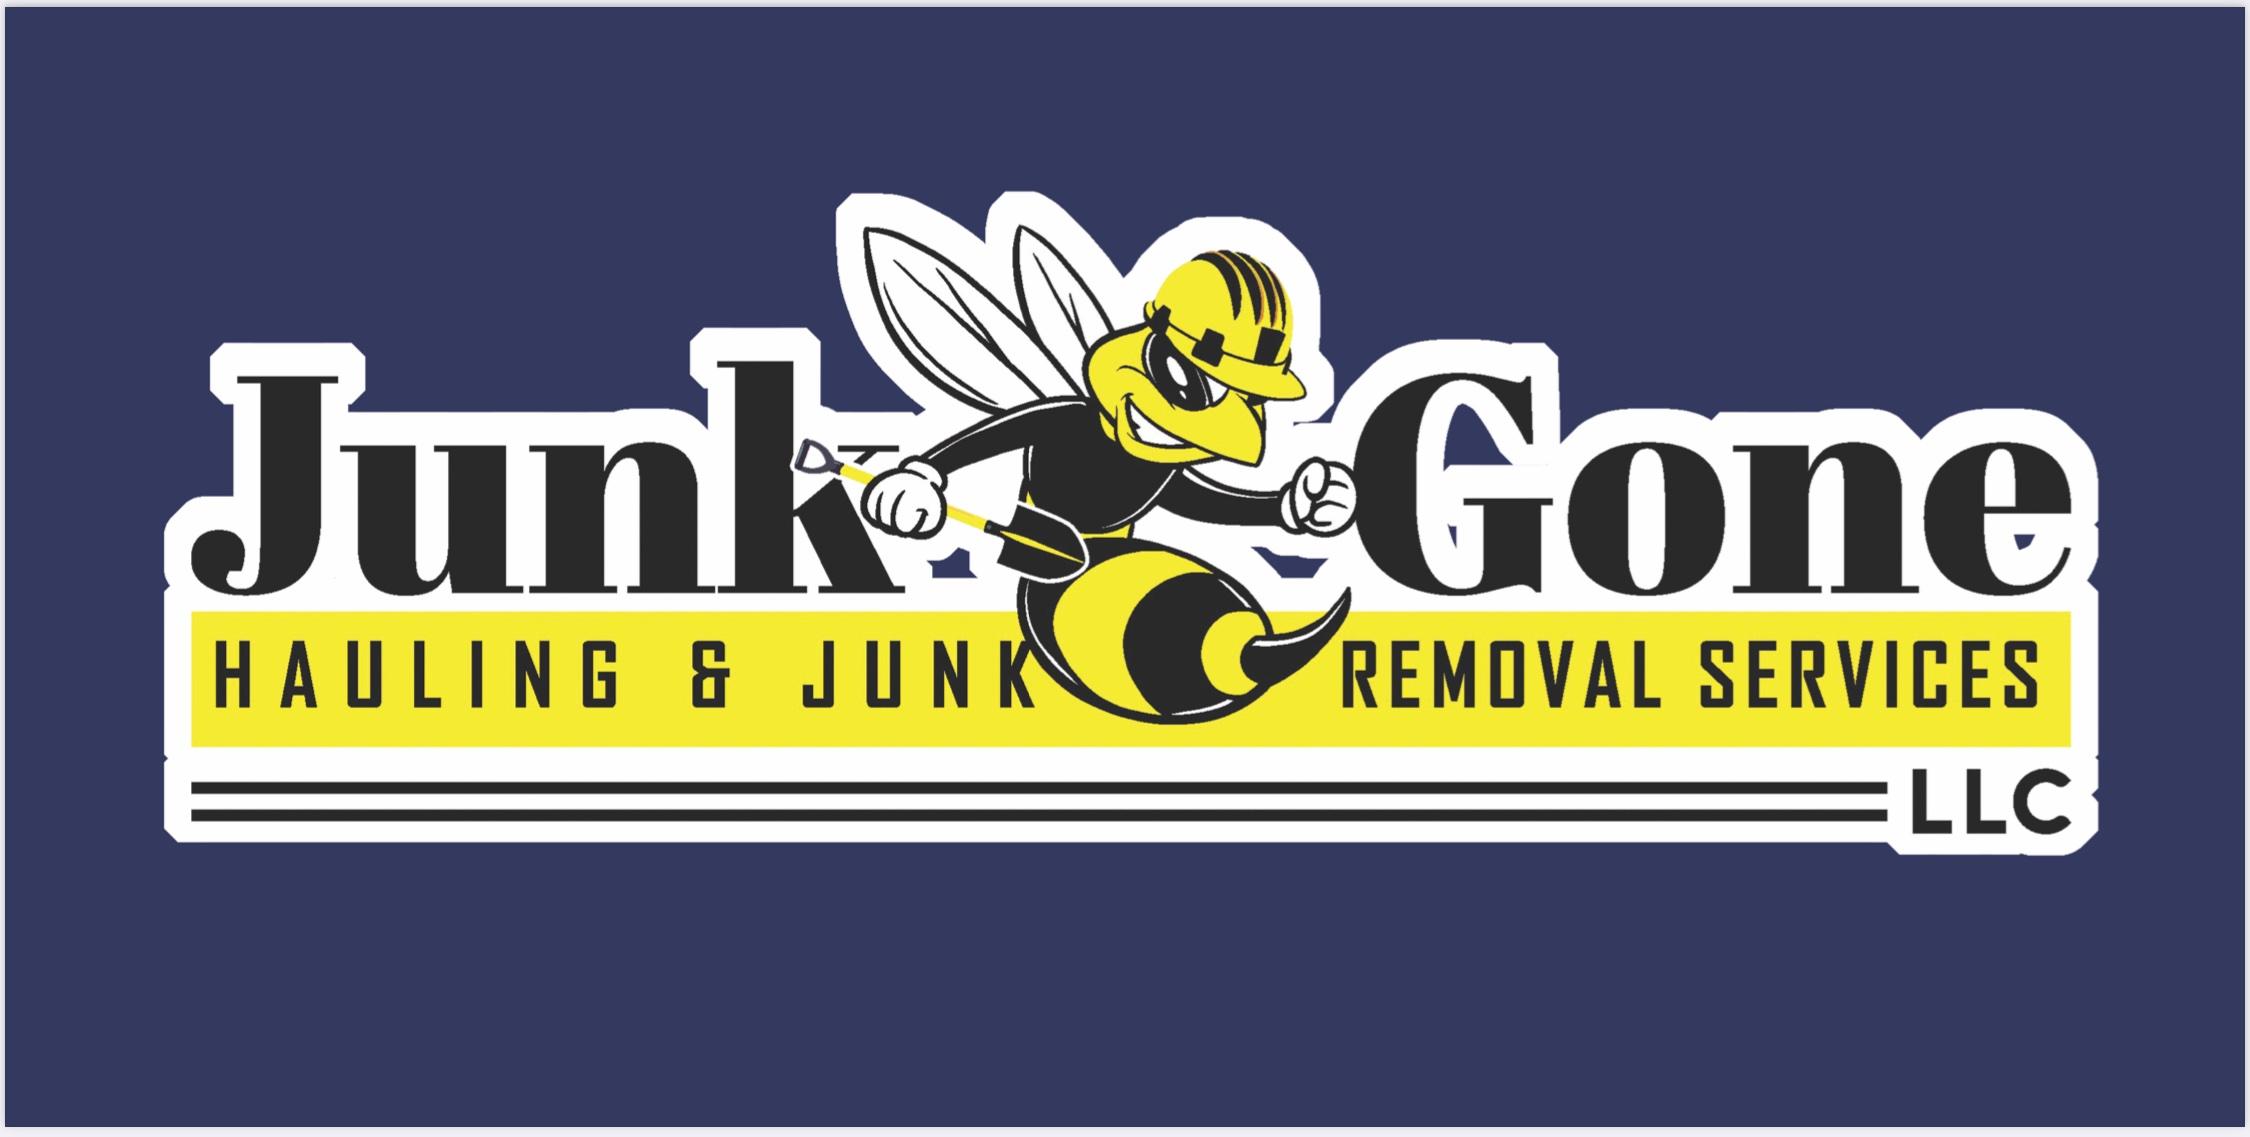 Junk Gone Hauling & Junk Removal Services LLC Logo